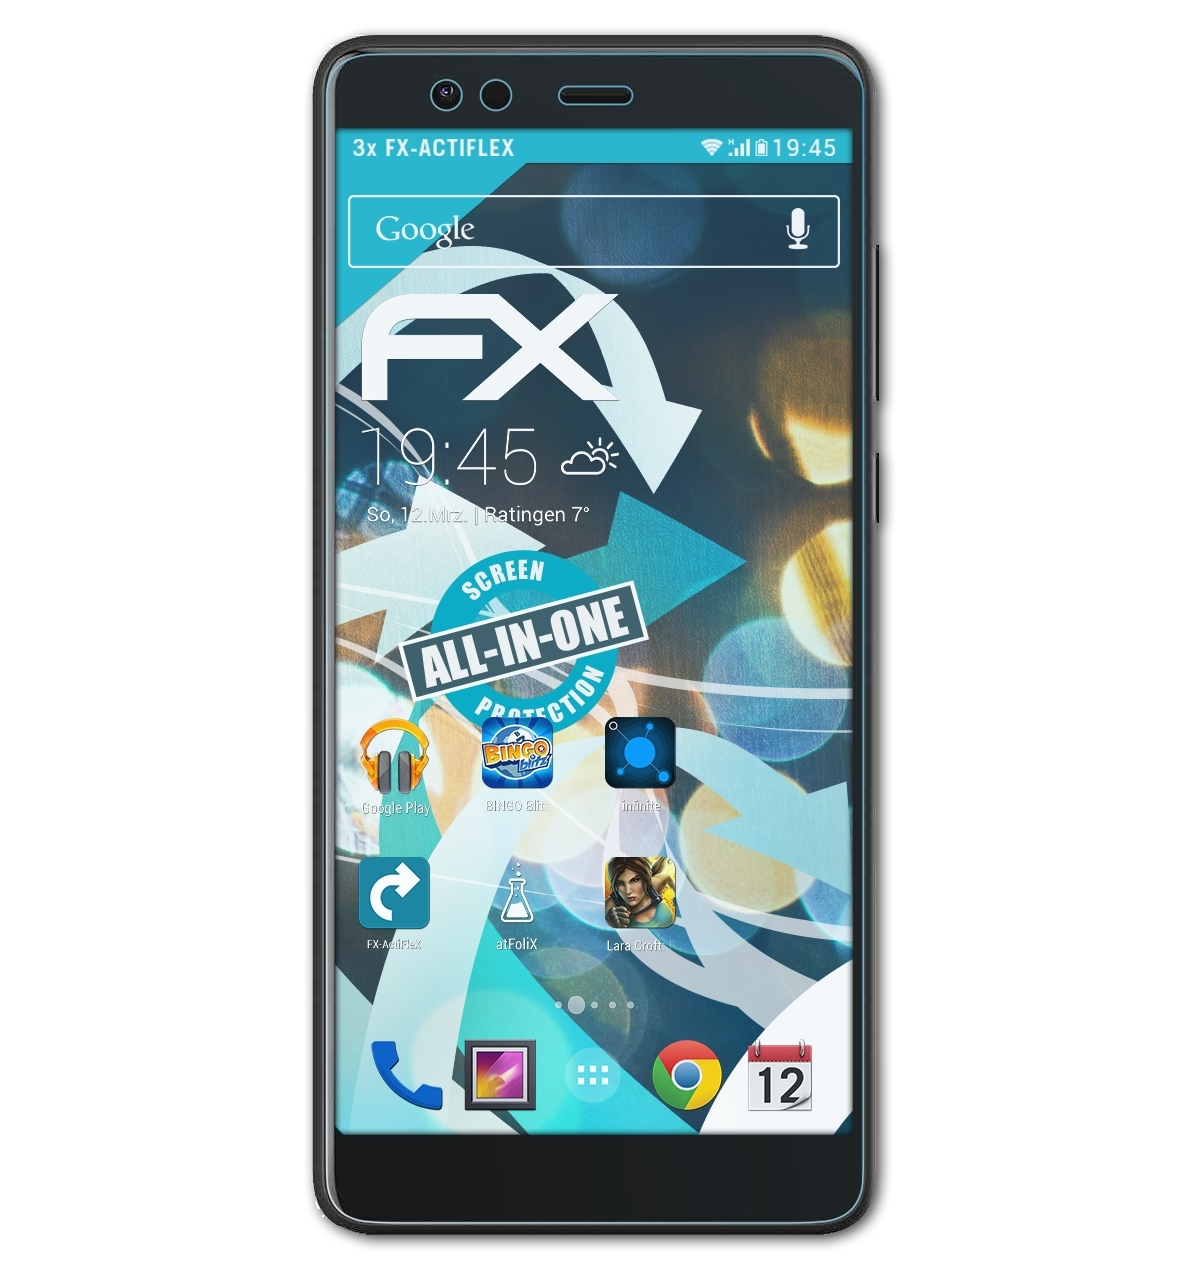 ATFOLIX 3x FX-ActiFleX Displayschutz(für Nokia 3.1 A)